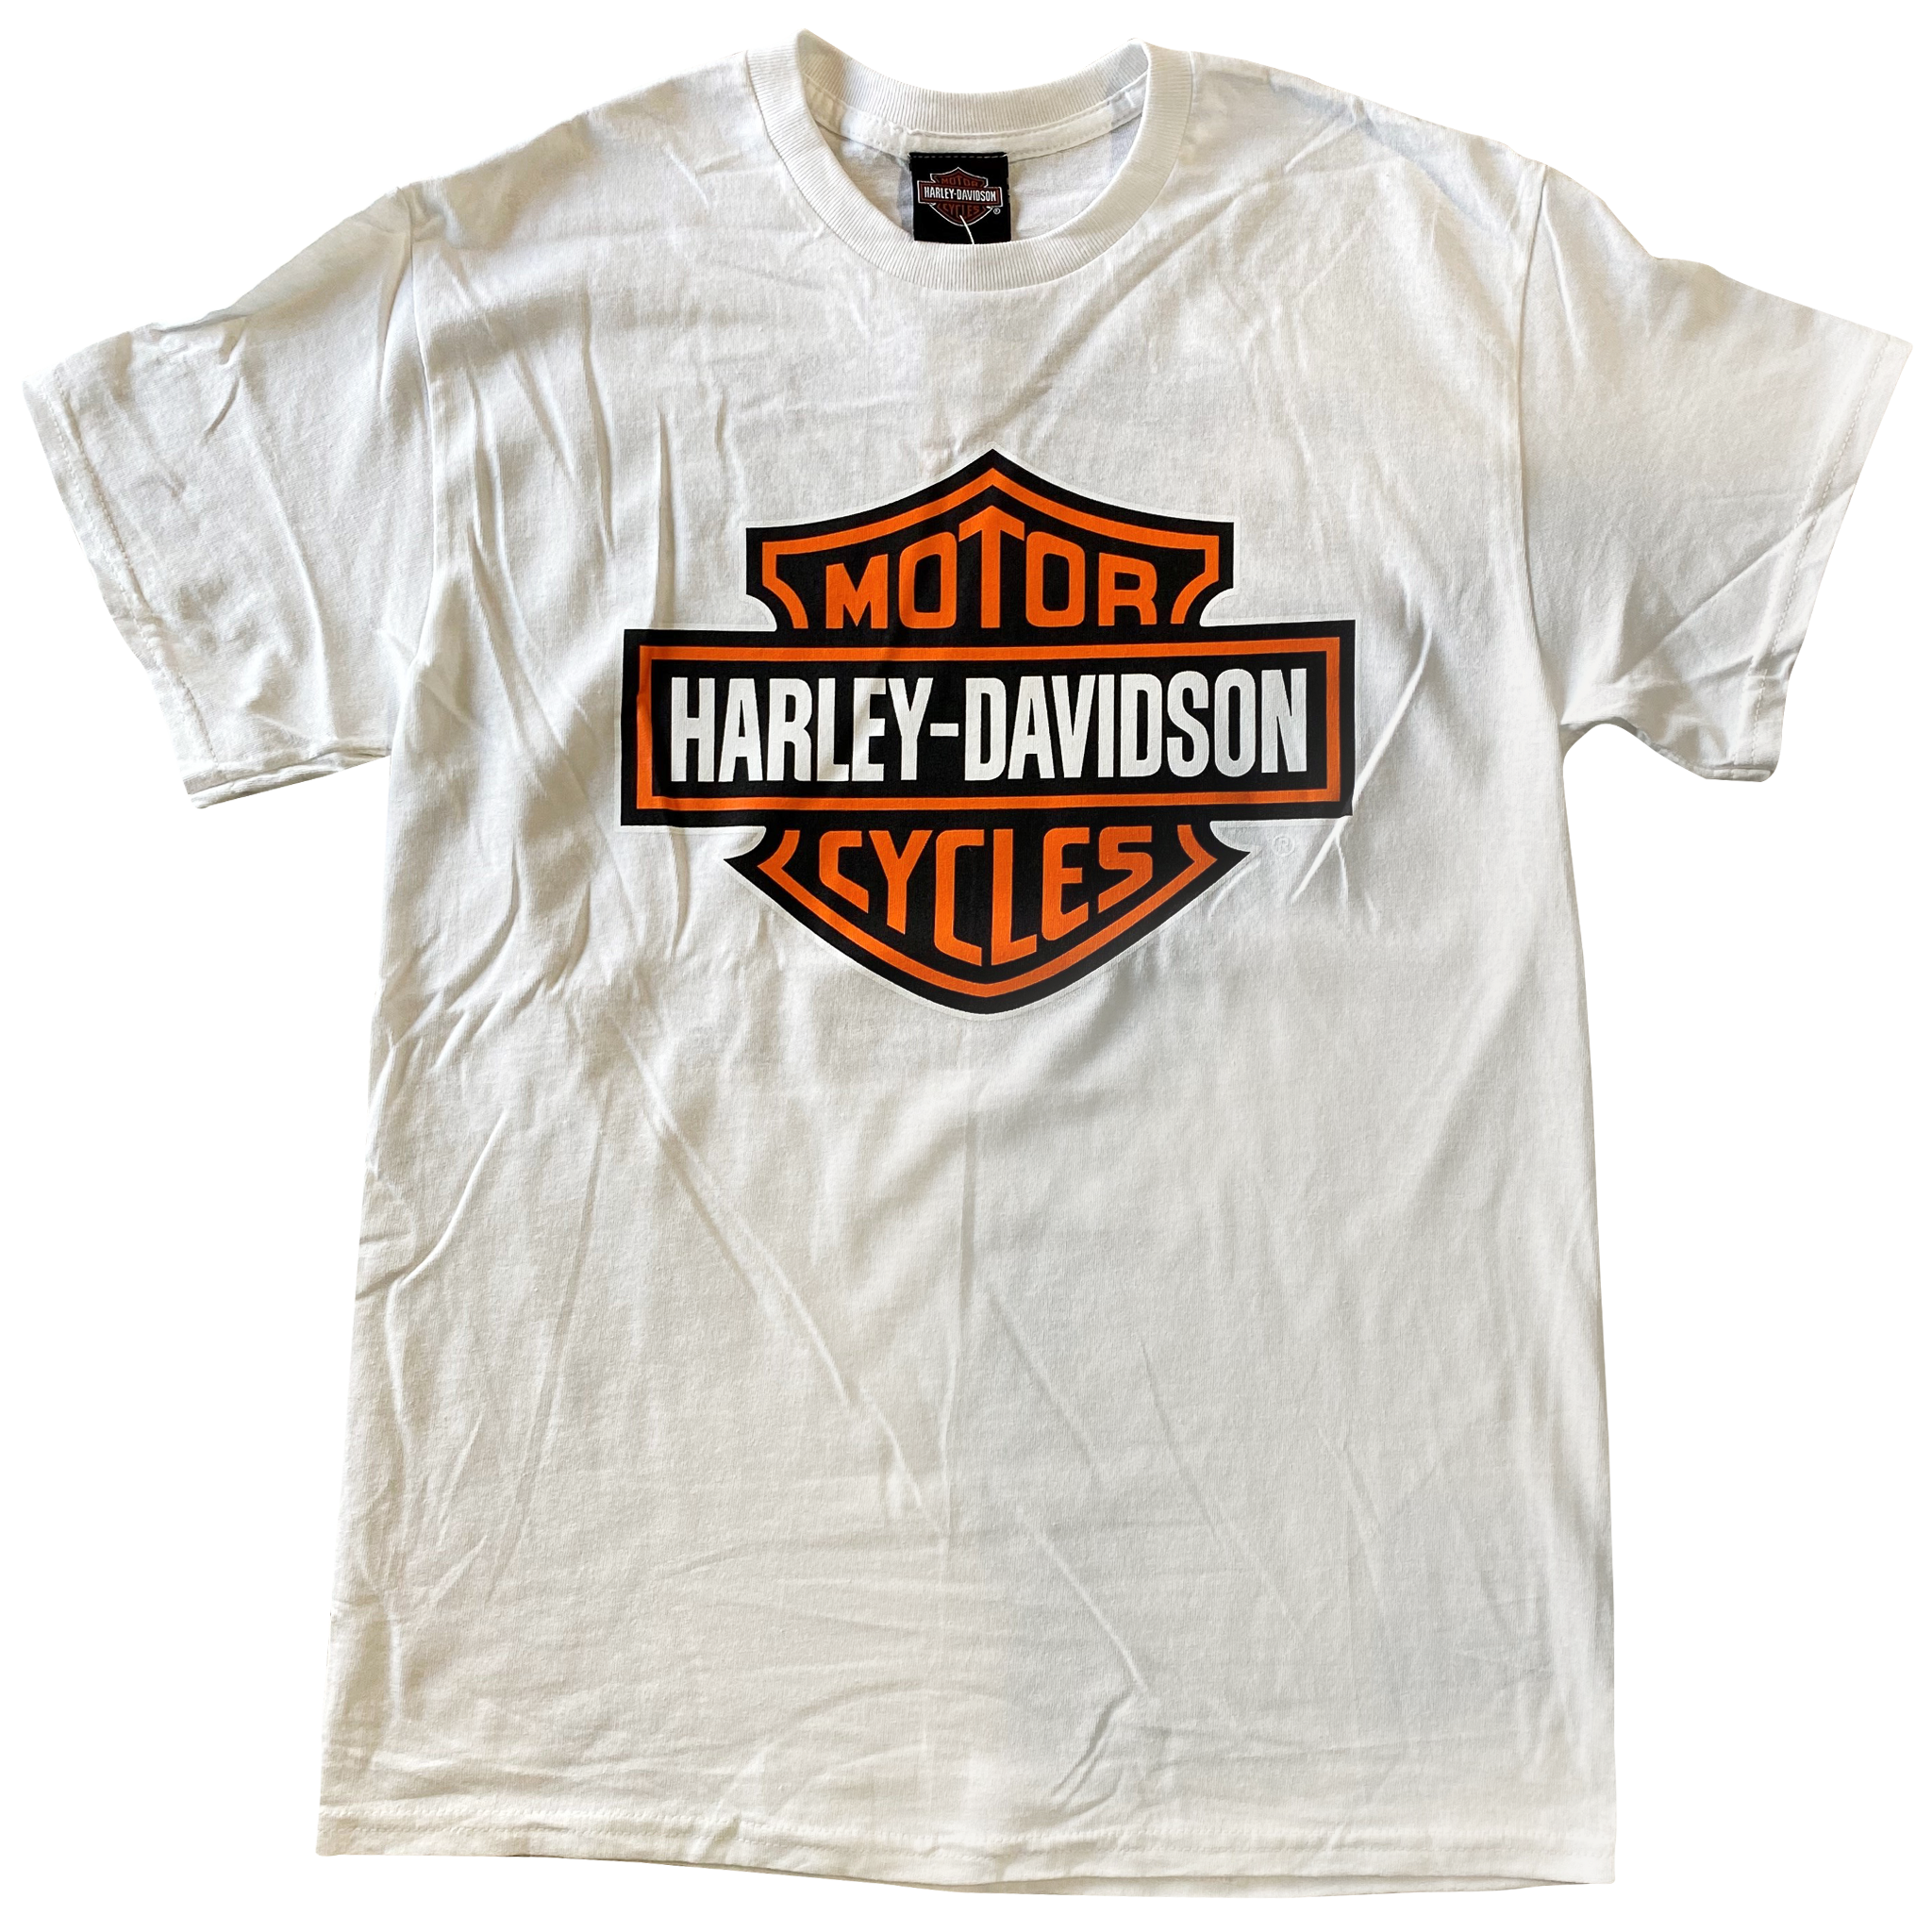 Adelaide Harley-Davidson B&S Tee - White